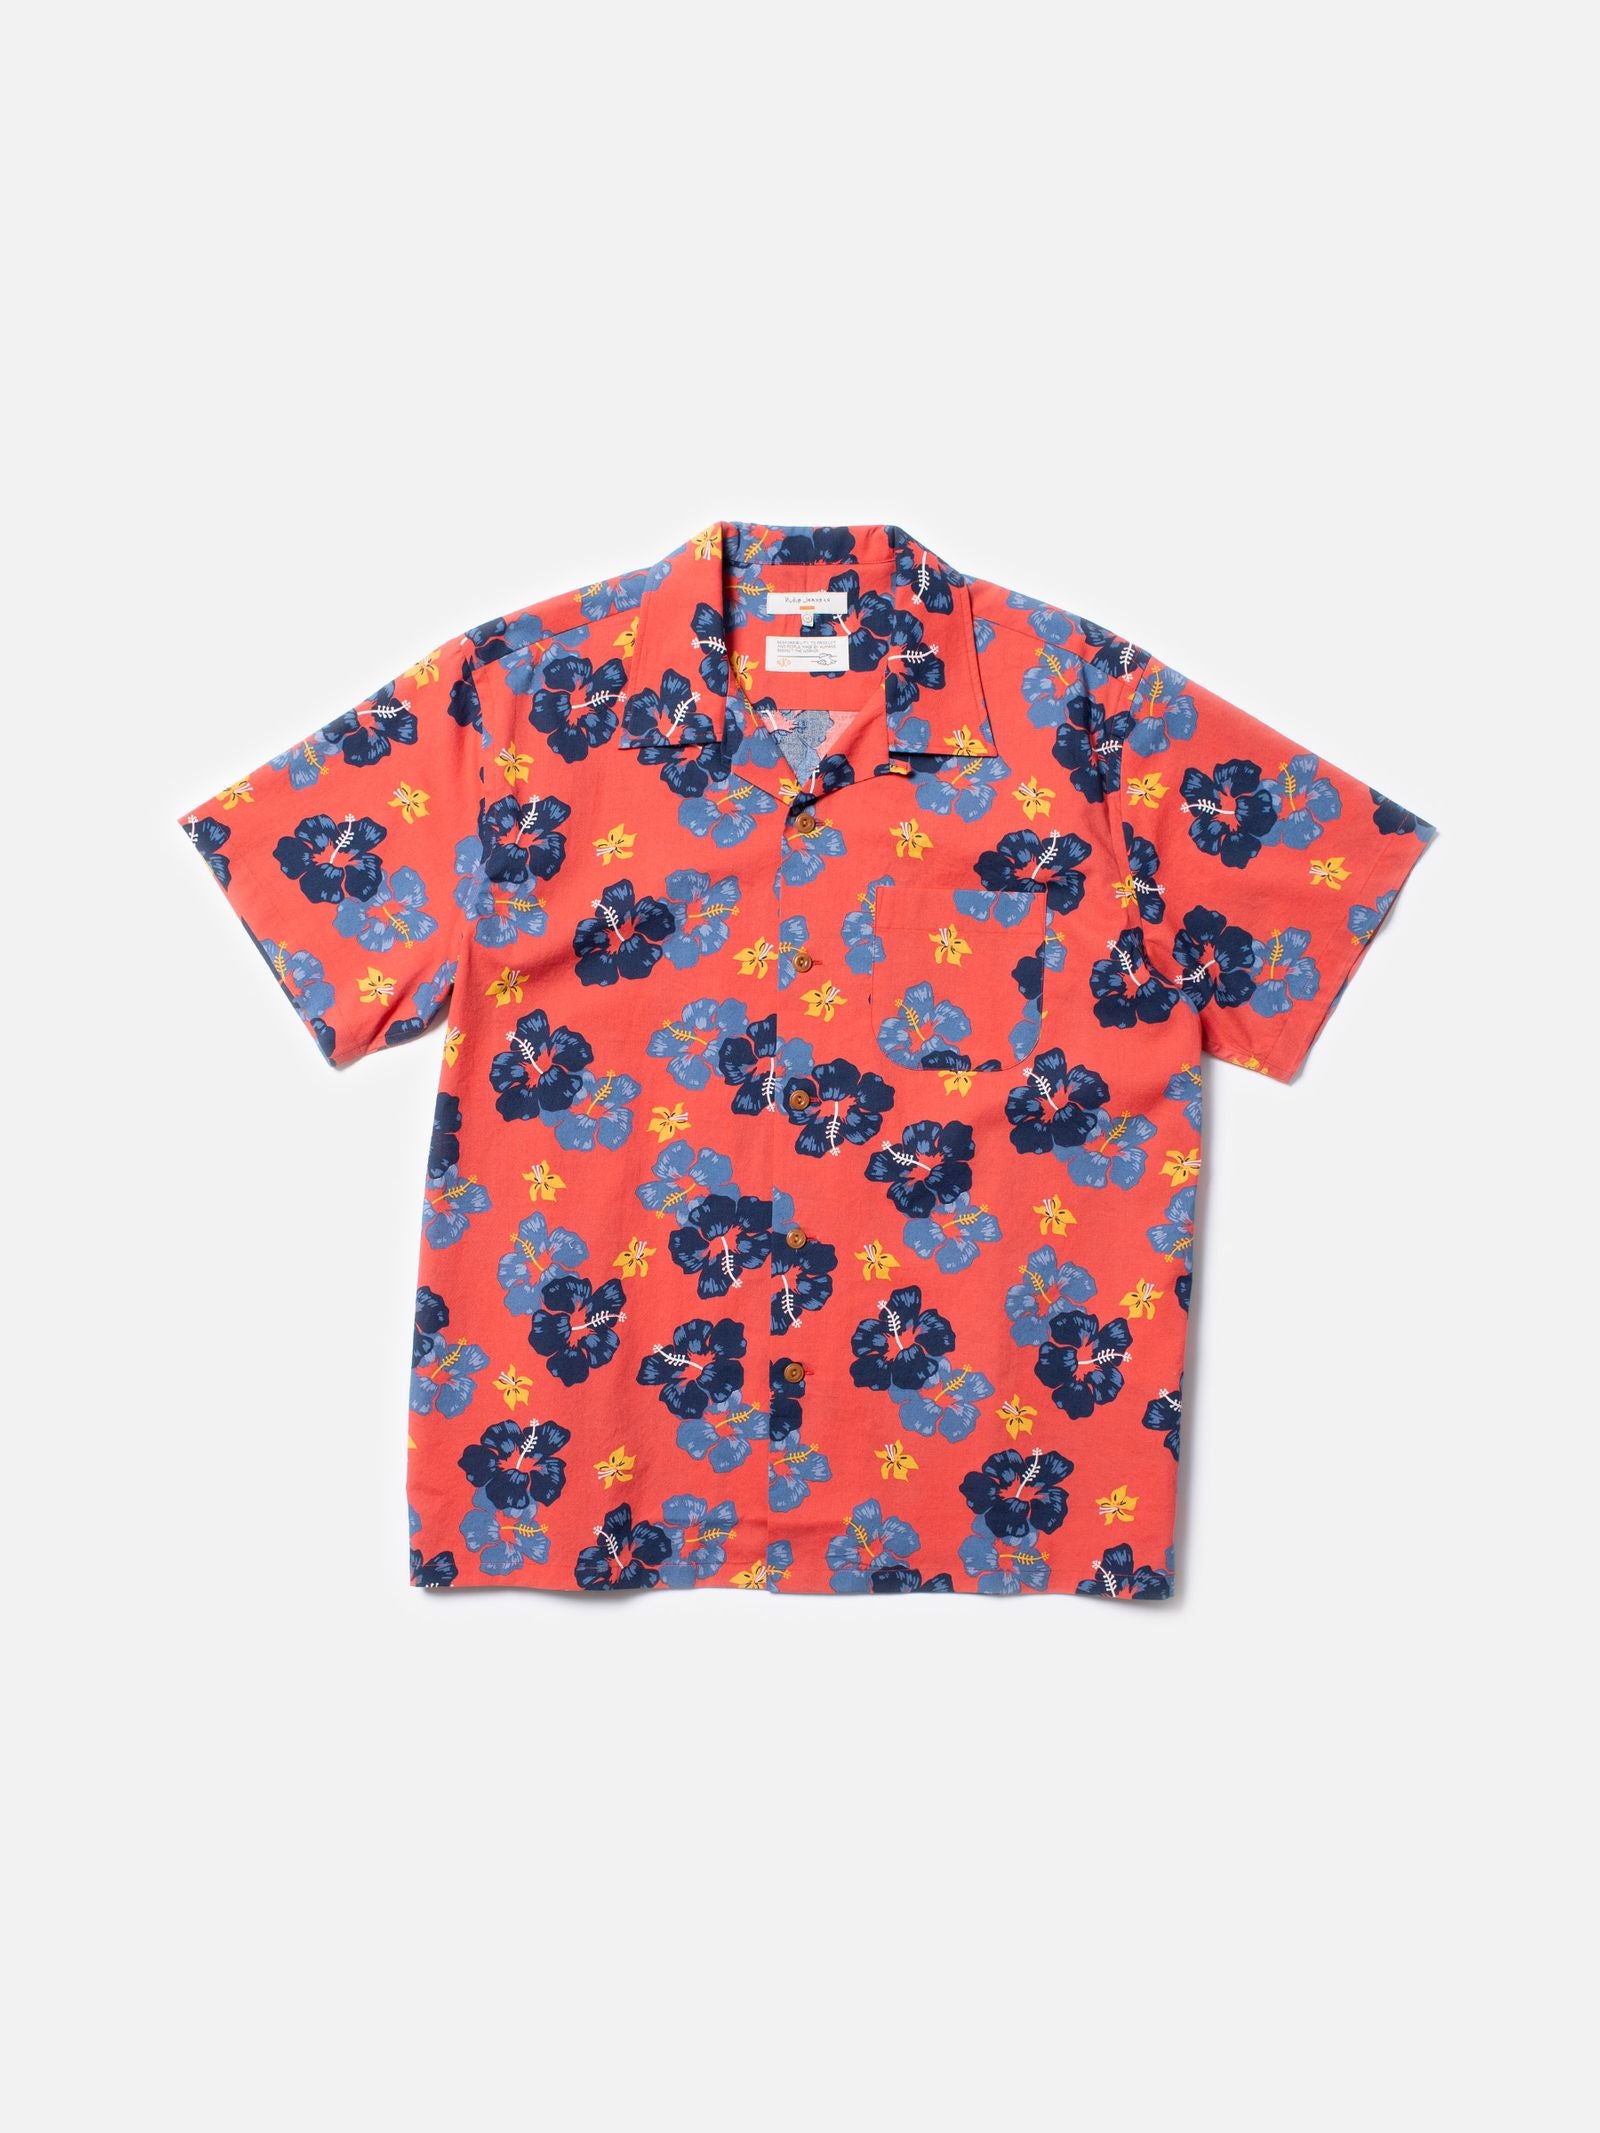 Arthur Flower Hawaii Shirt - Red - Nudie Jeans - Danali - 288929